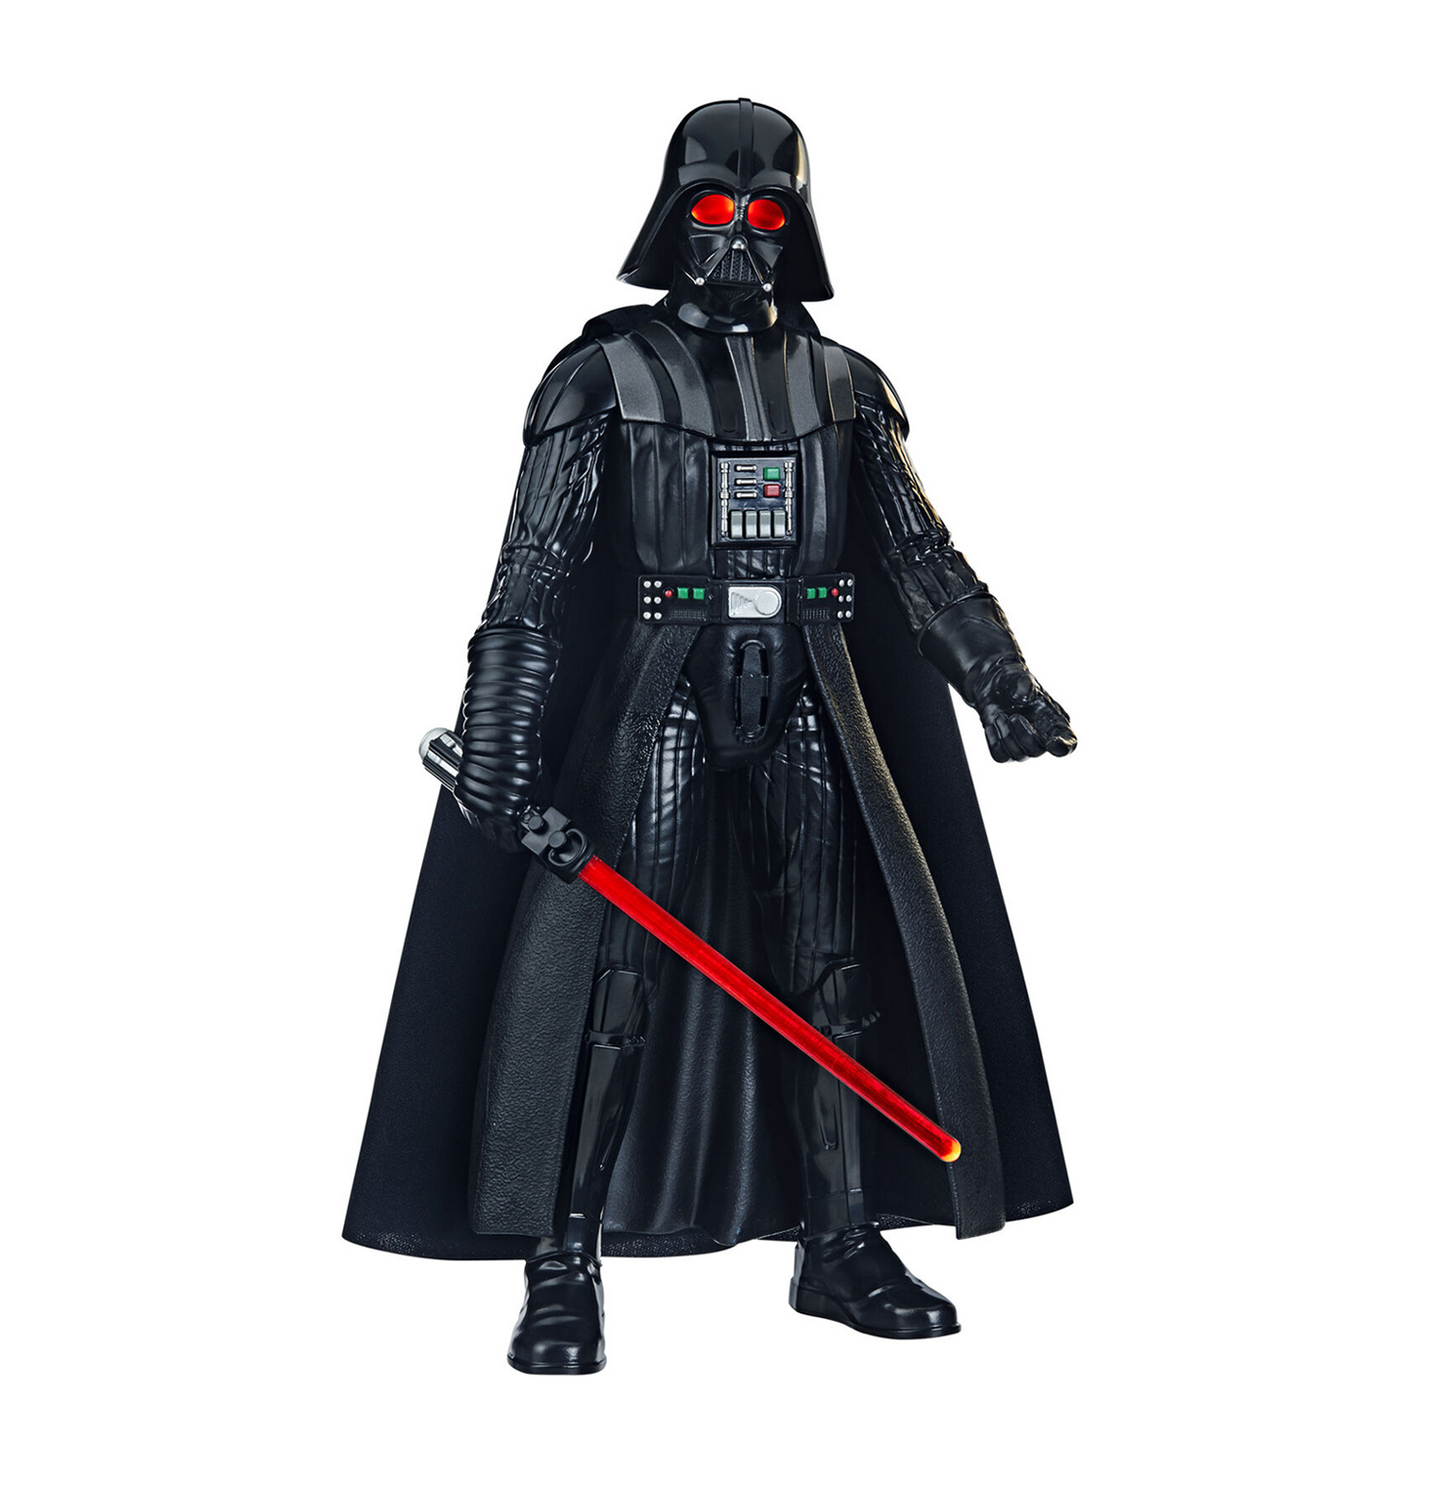 Star Wars Obi Wan Kenobi Galactic Darth Vader Interactive Action Figure